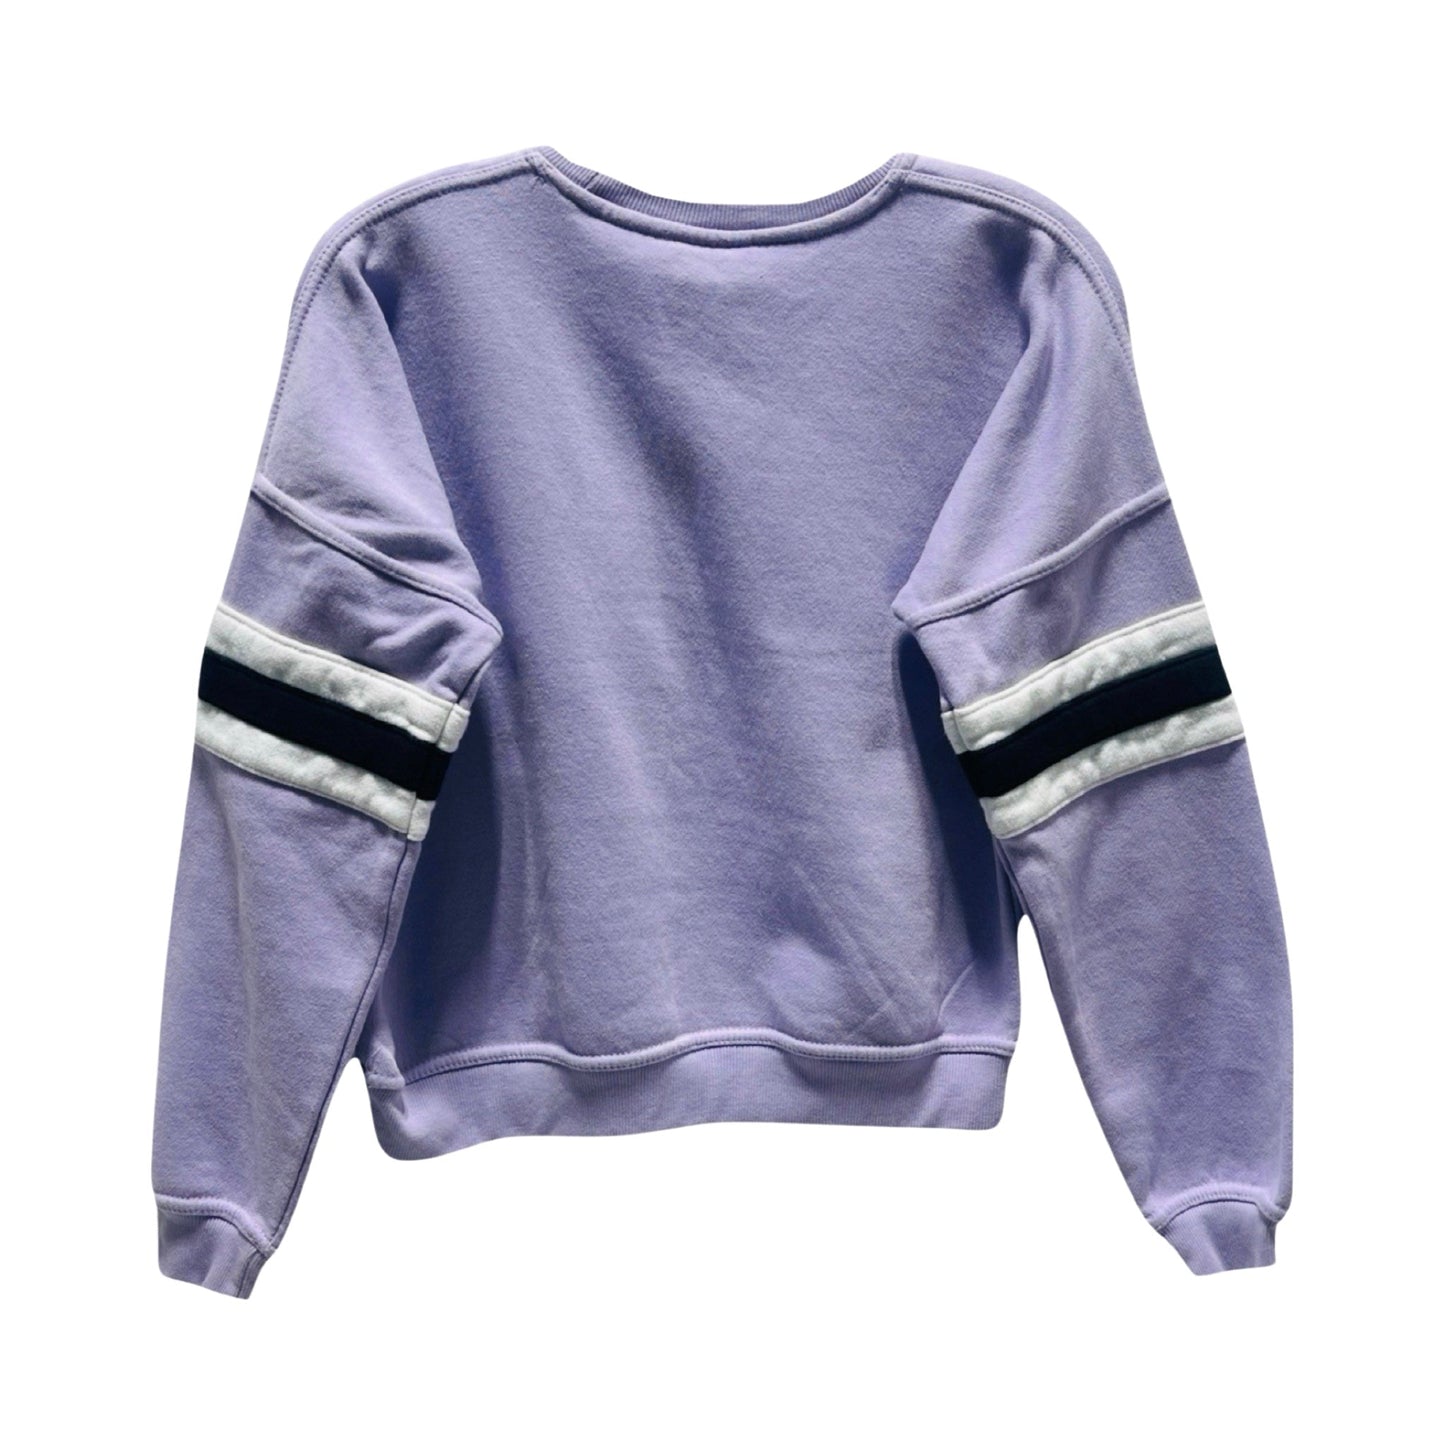 Sweatshirt Crewneck By Clothes Mentor  Size: S